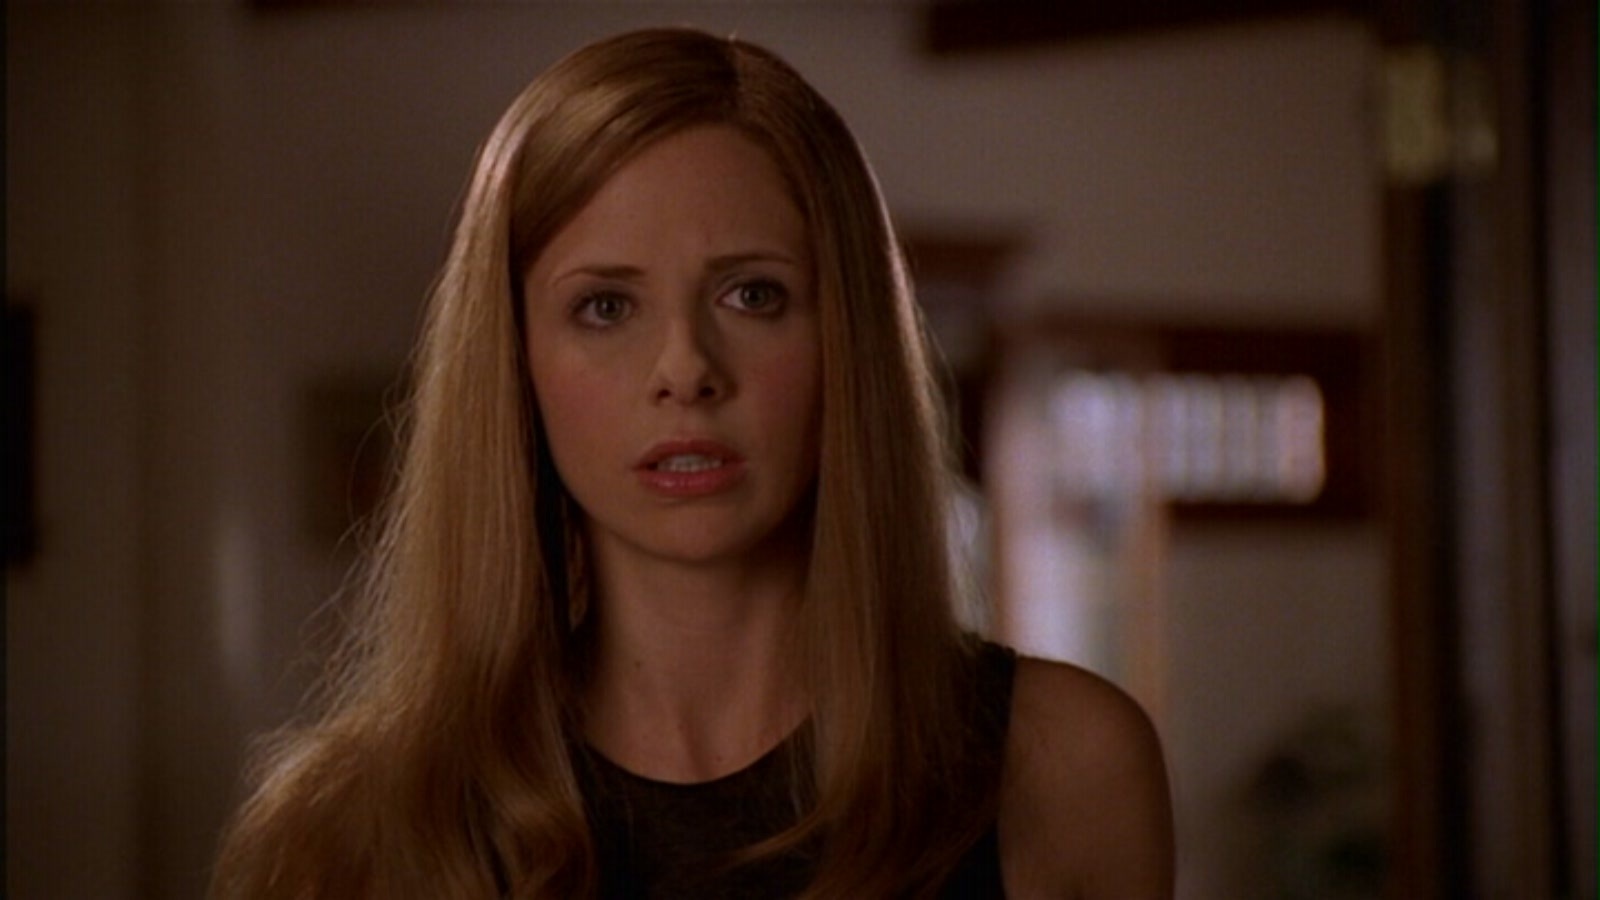 Buffy the Vampire Slayer Image: 6.11.